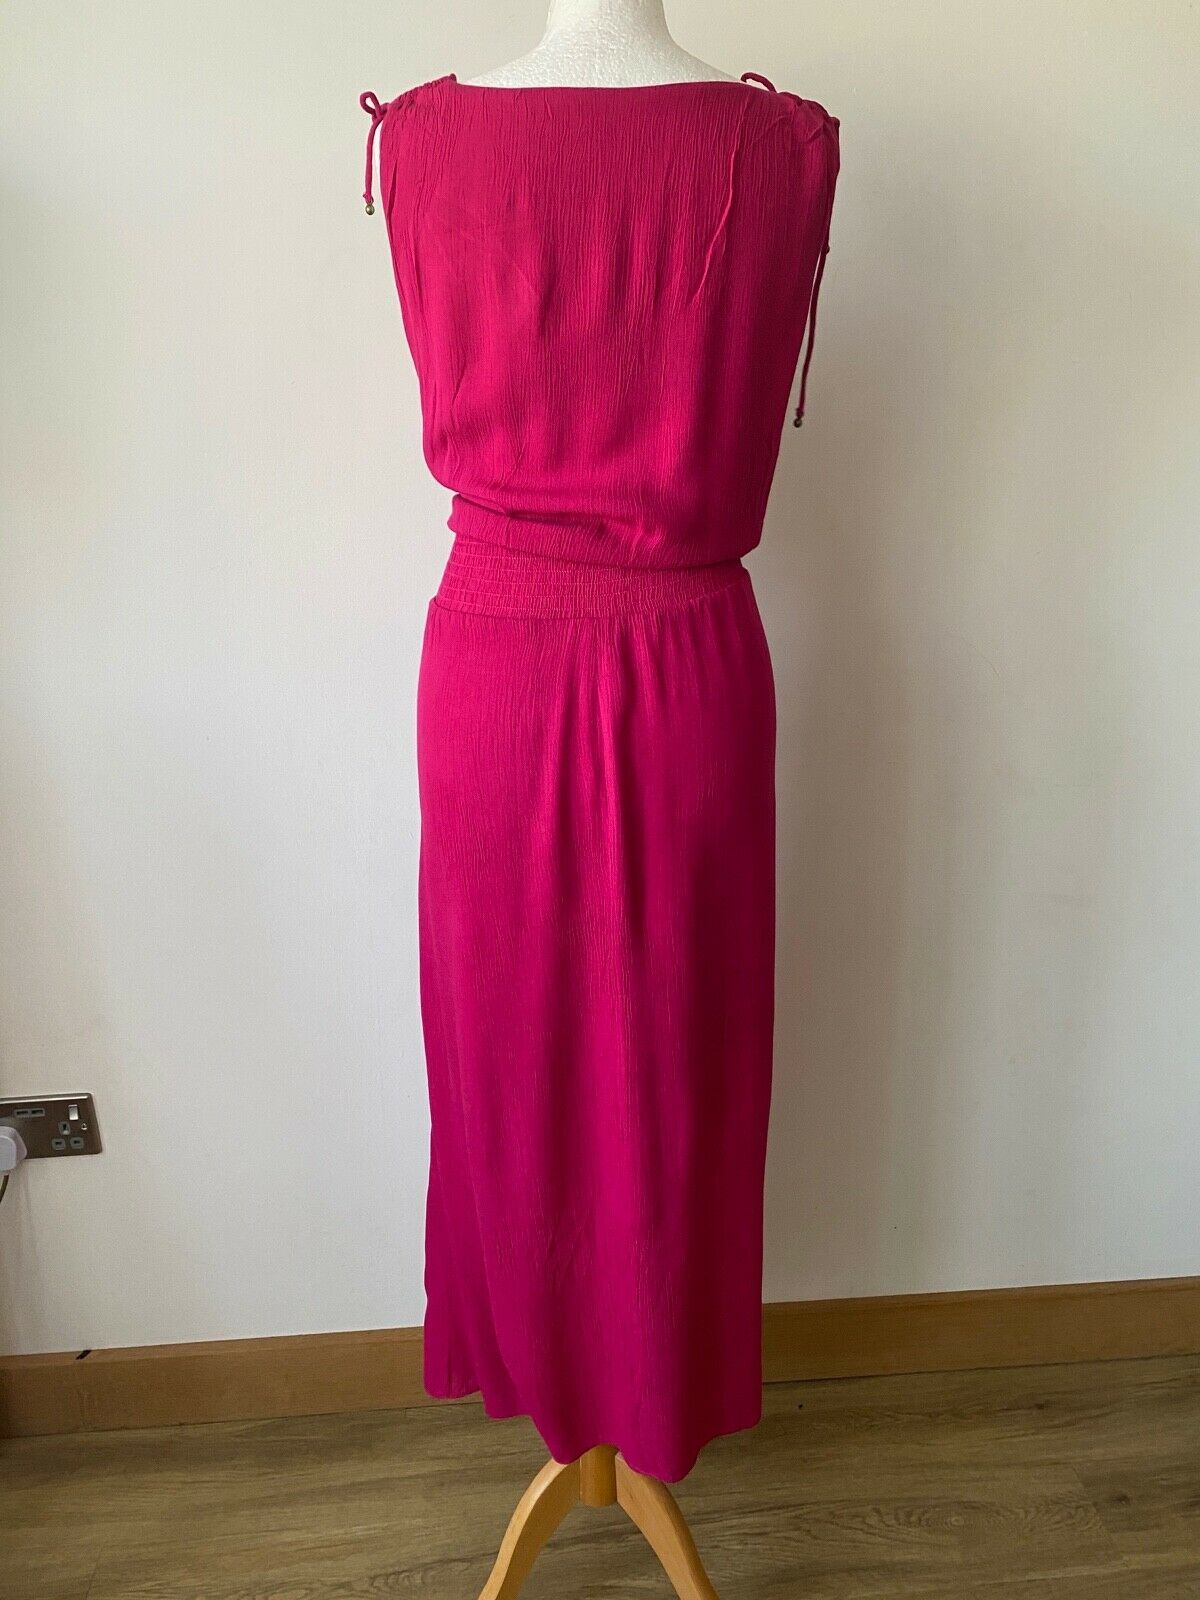 Pink Sleeveless Maxi Dress Size 14 - 16 Tie Straps Layered